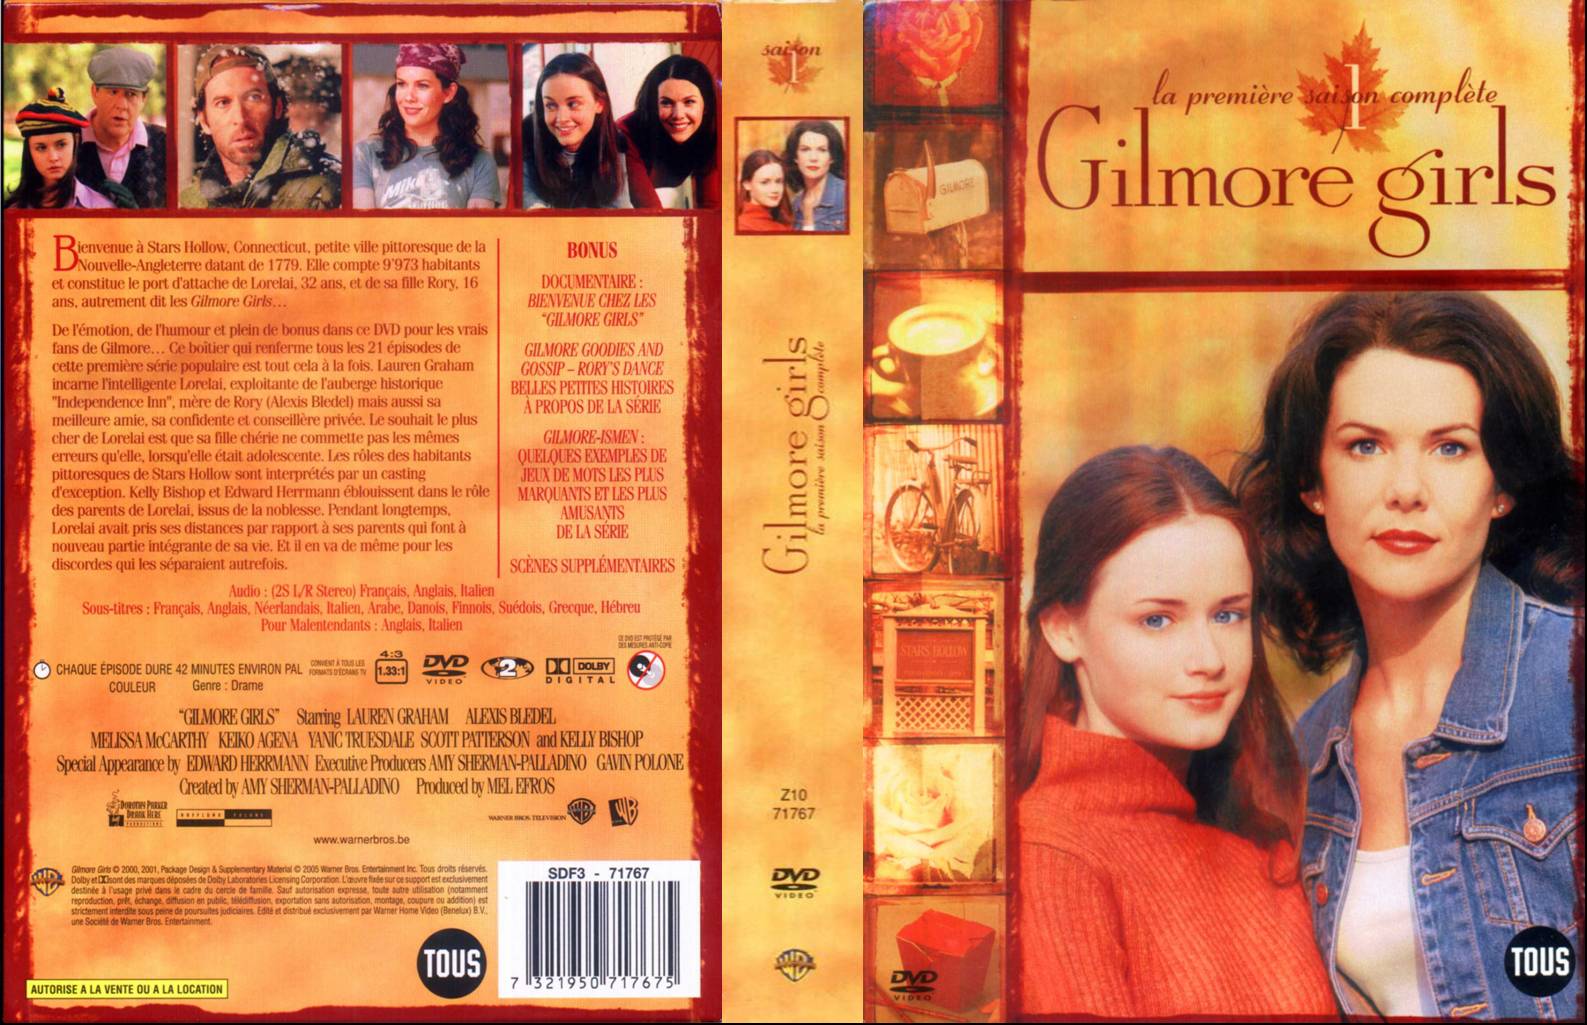 Jaquette DVD Gilmore girls saison 1